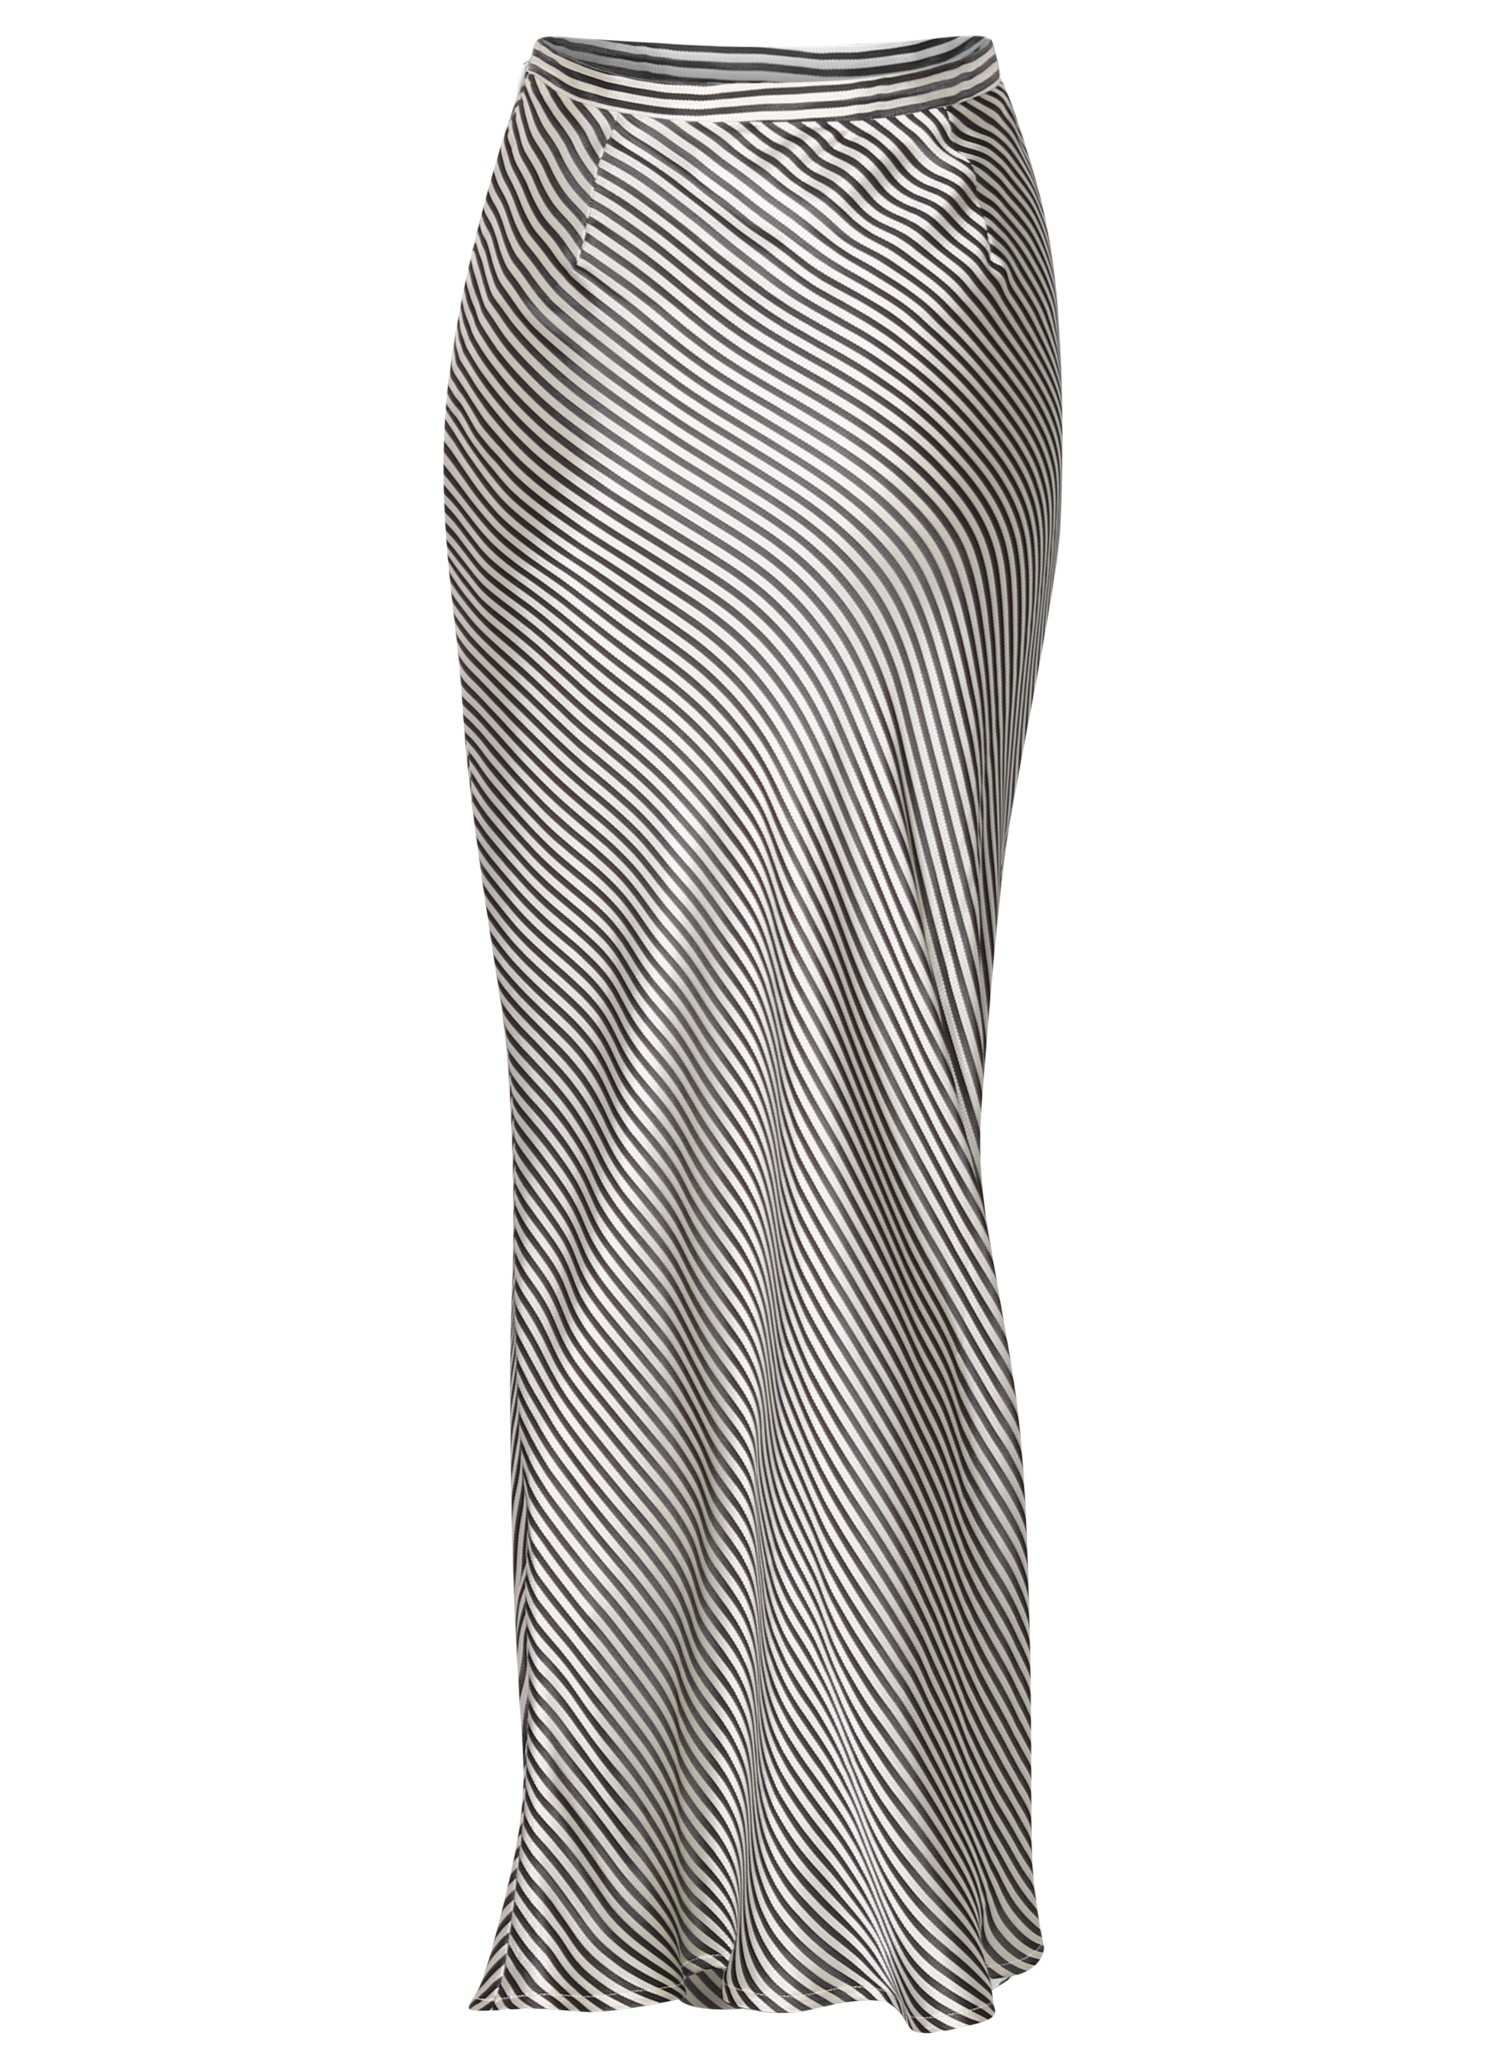 DAGMAR Long Silk Skirt in Black/Ecru Stripe 36